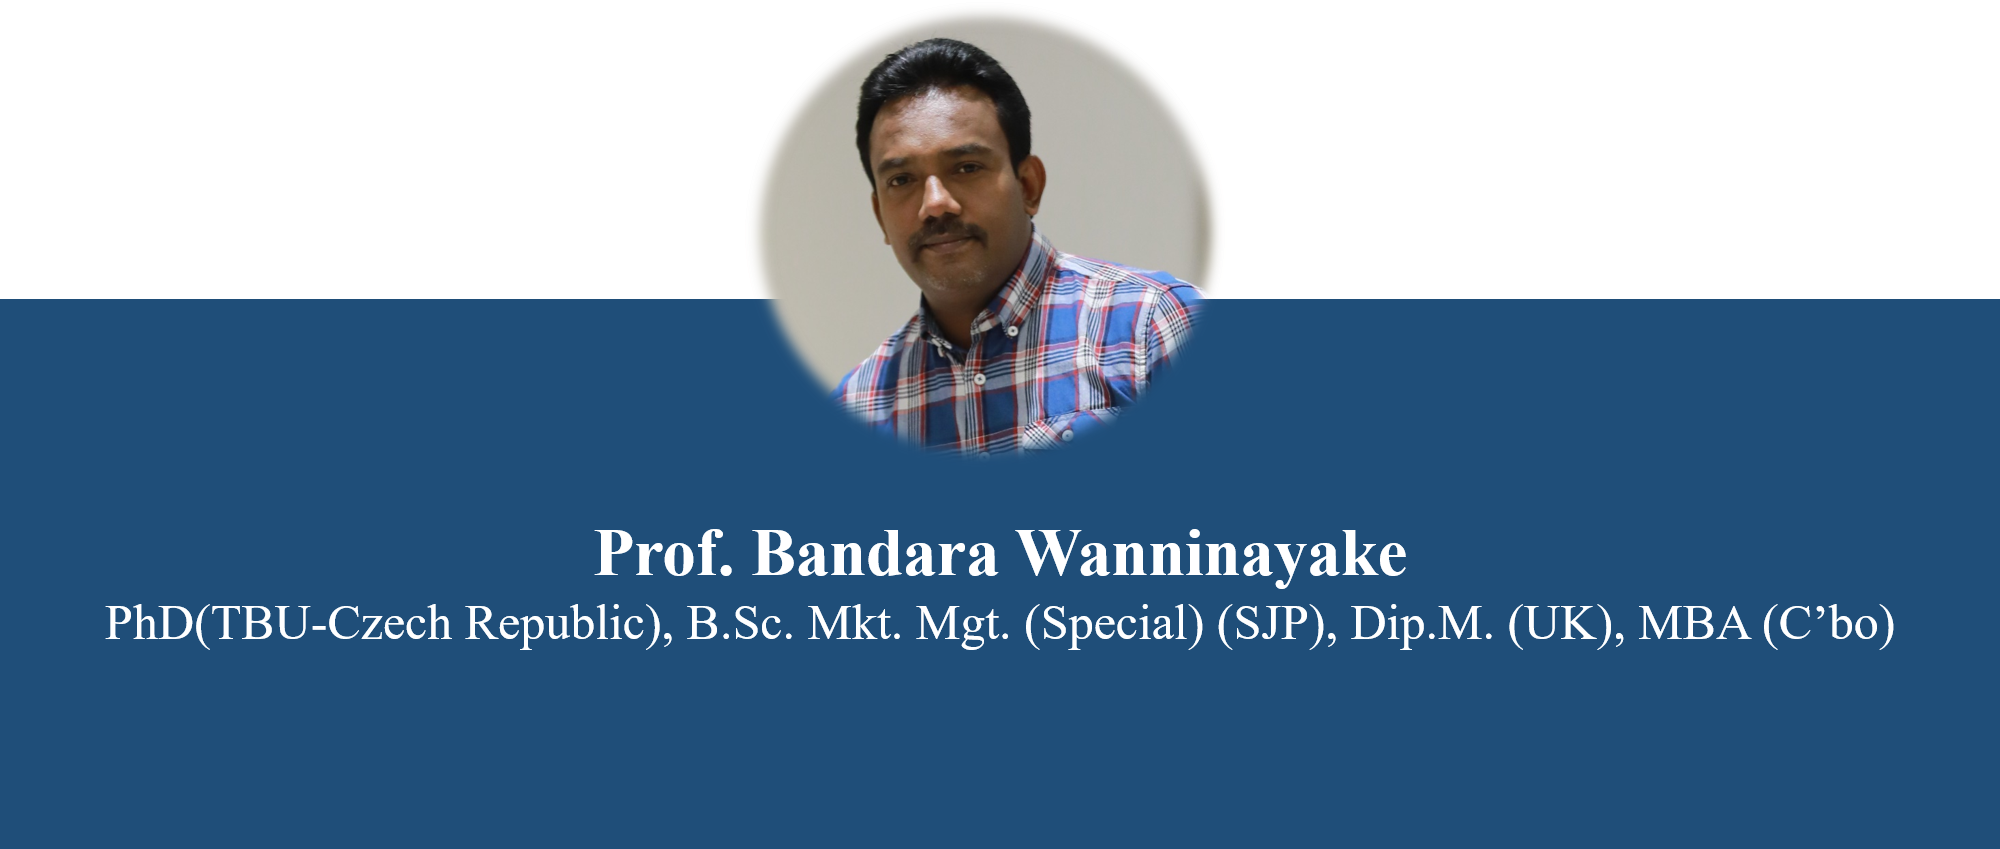 prof.-bandara-wanninayake.png